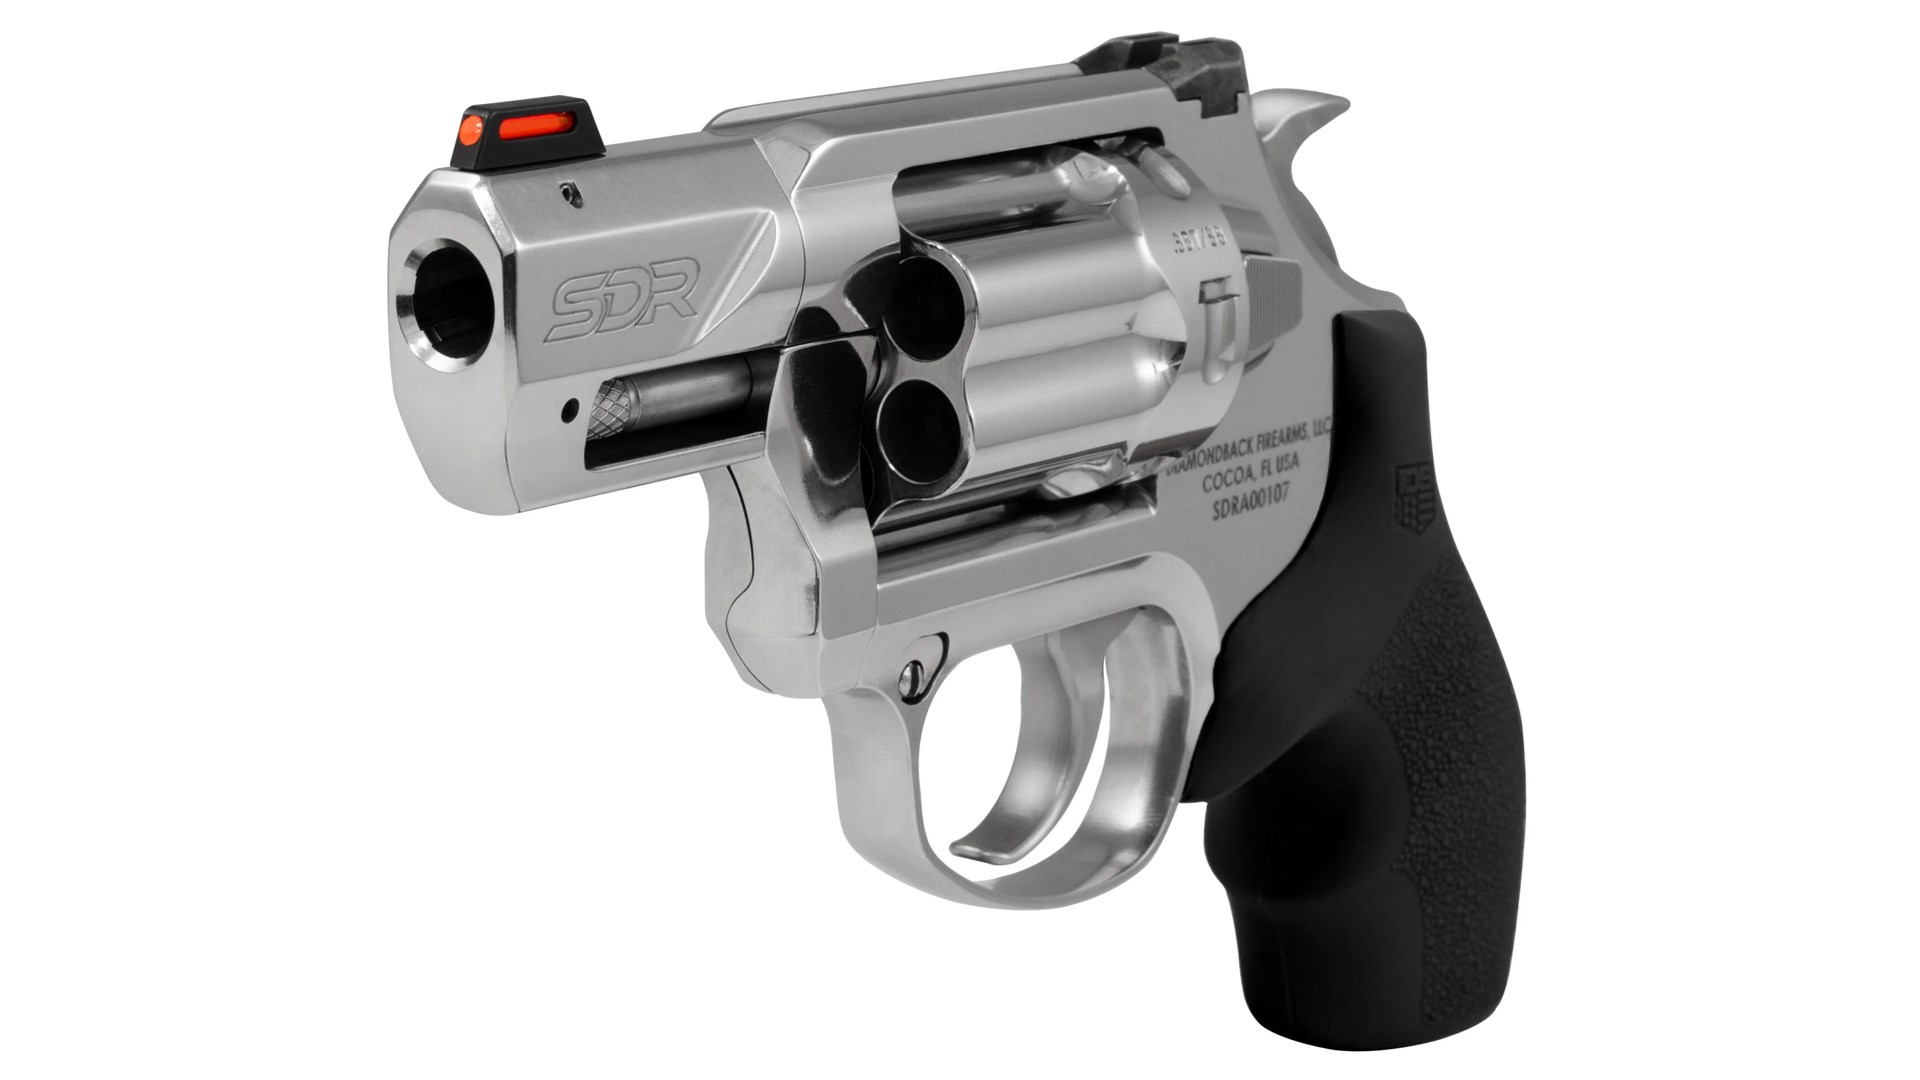 A front view of the Diamondback SDR revolver.